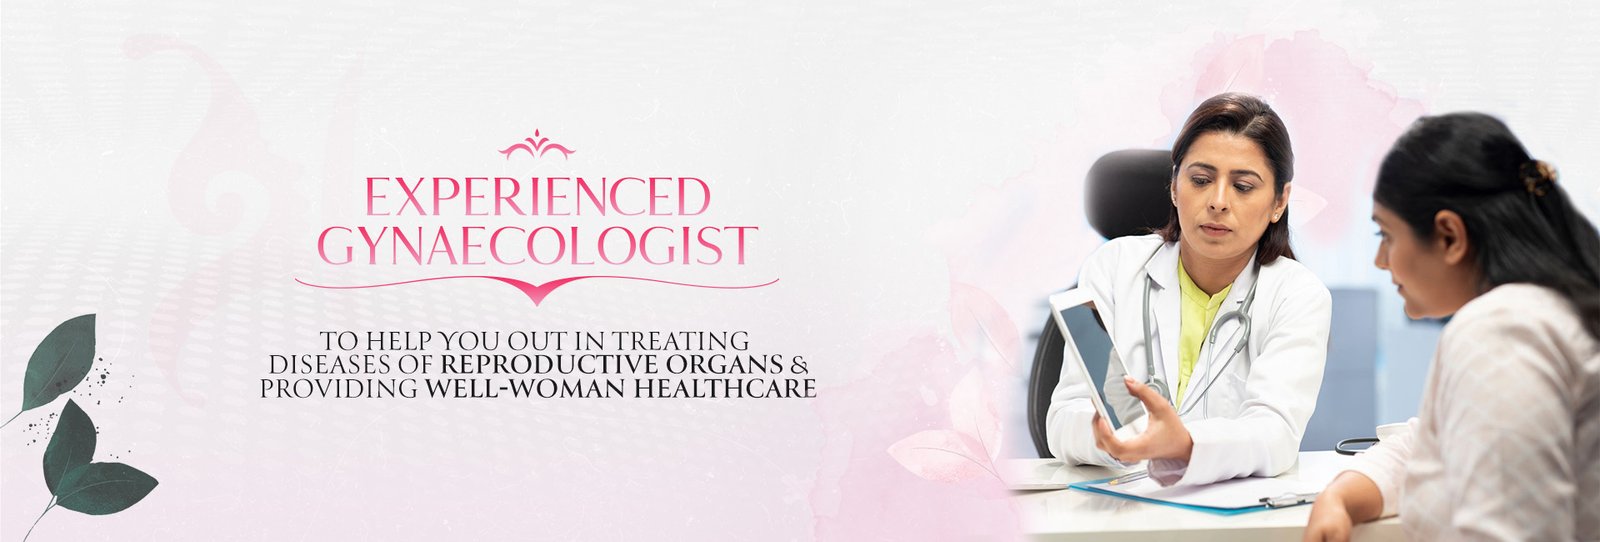 best gynae in gurgaon, Dr. Deepti Asthana: Gynecologist in Gurgaon, best obstetrician in Gurgaon